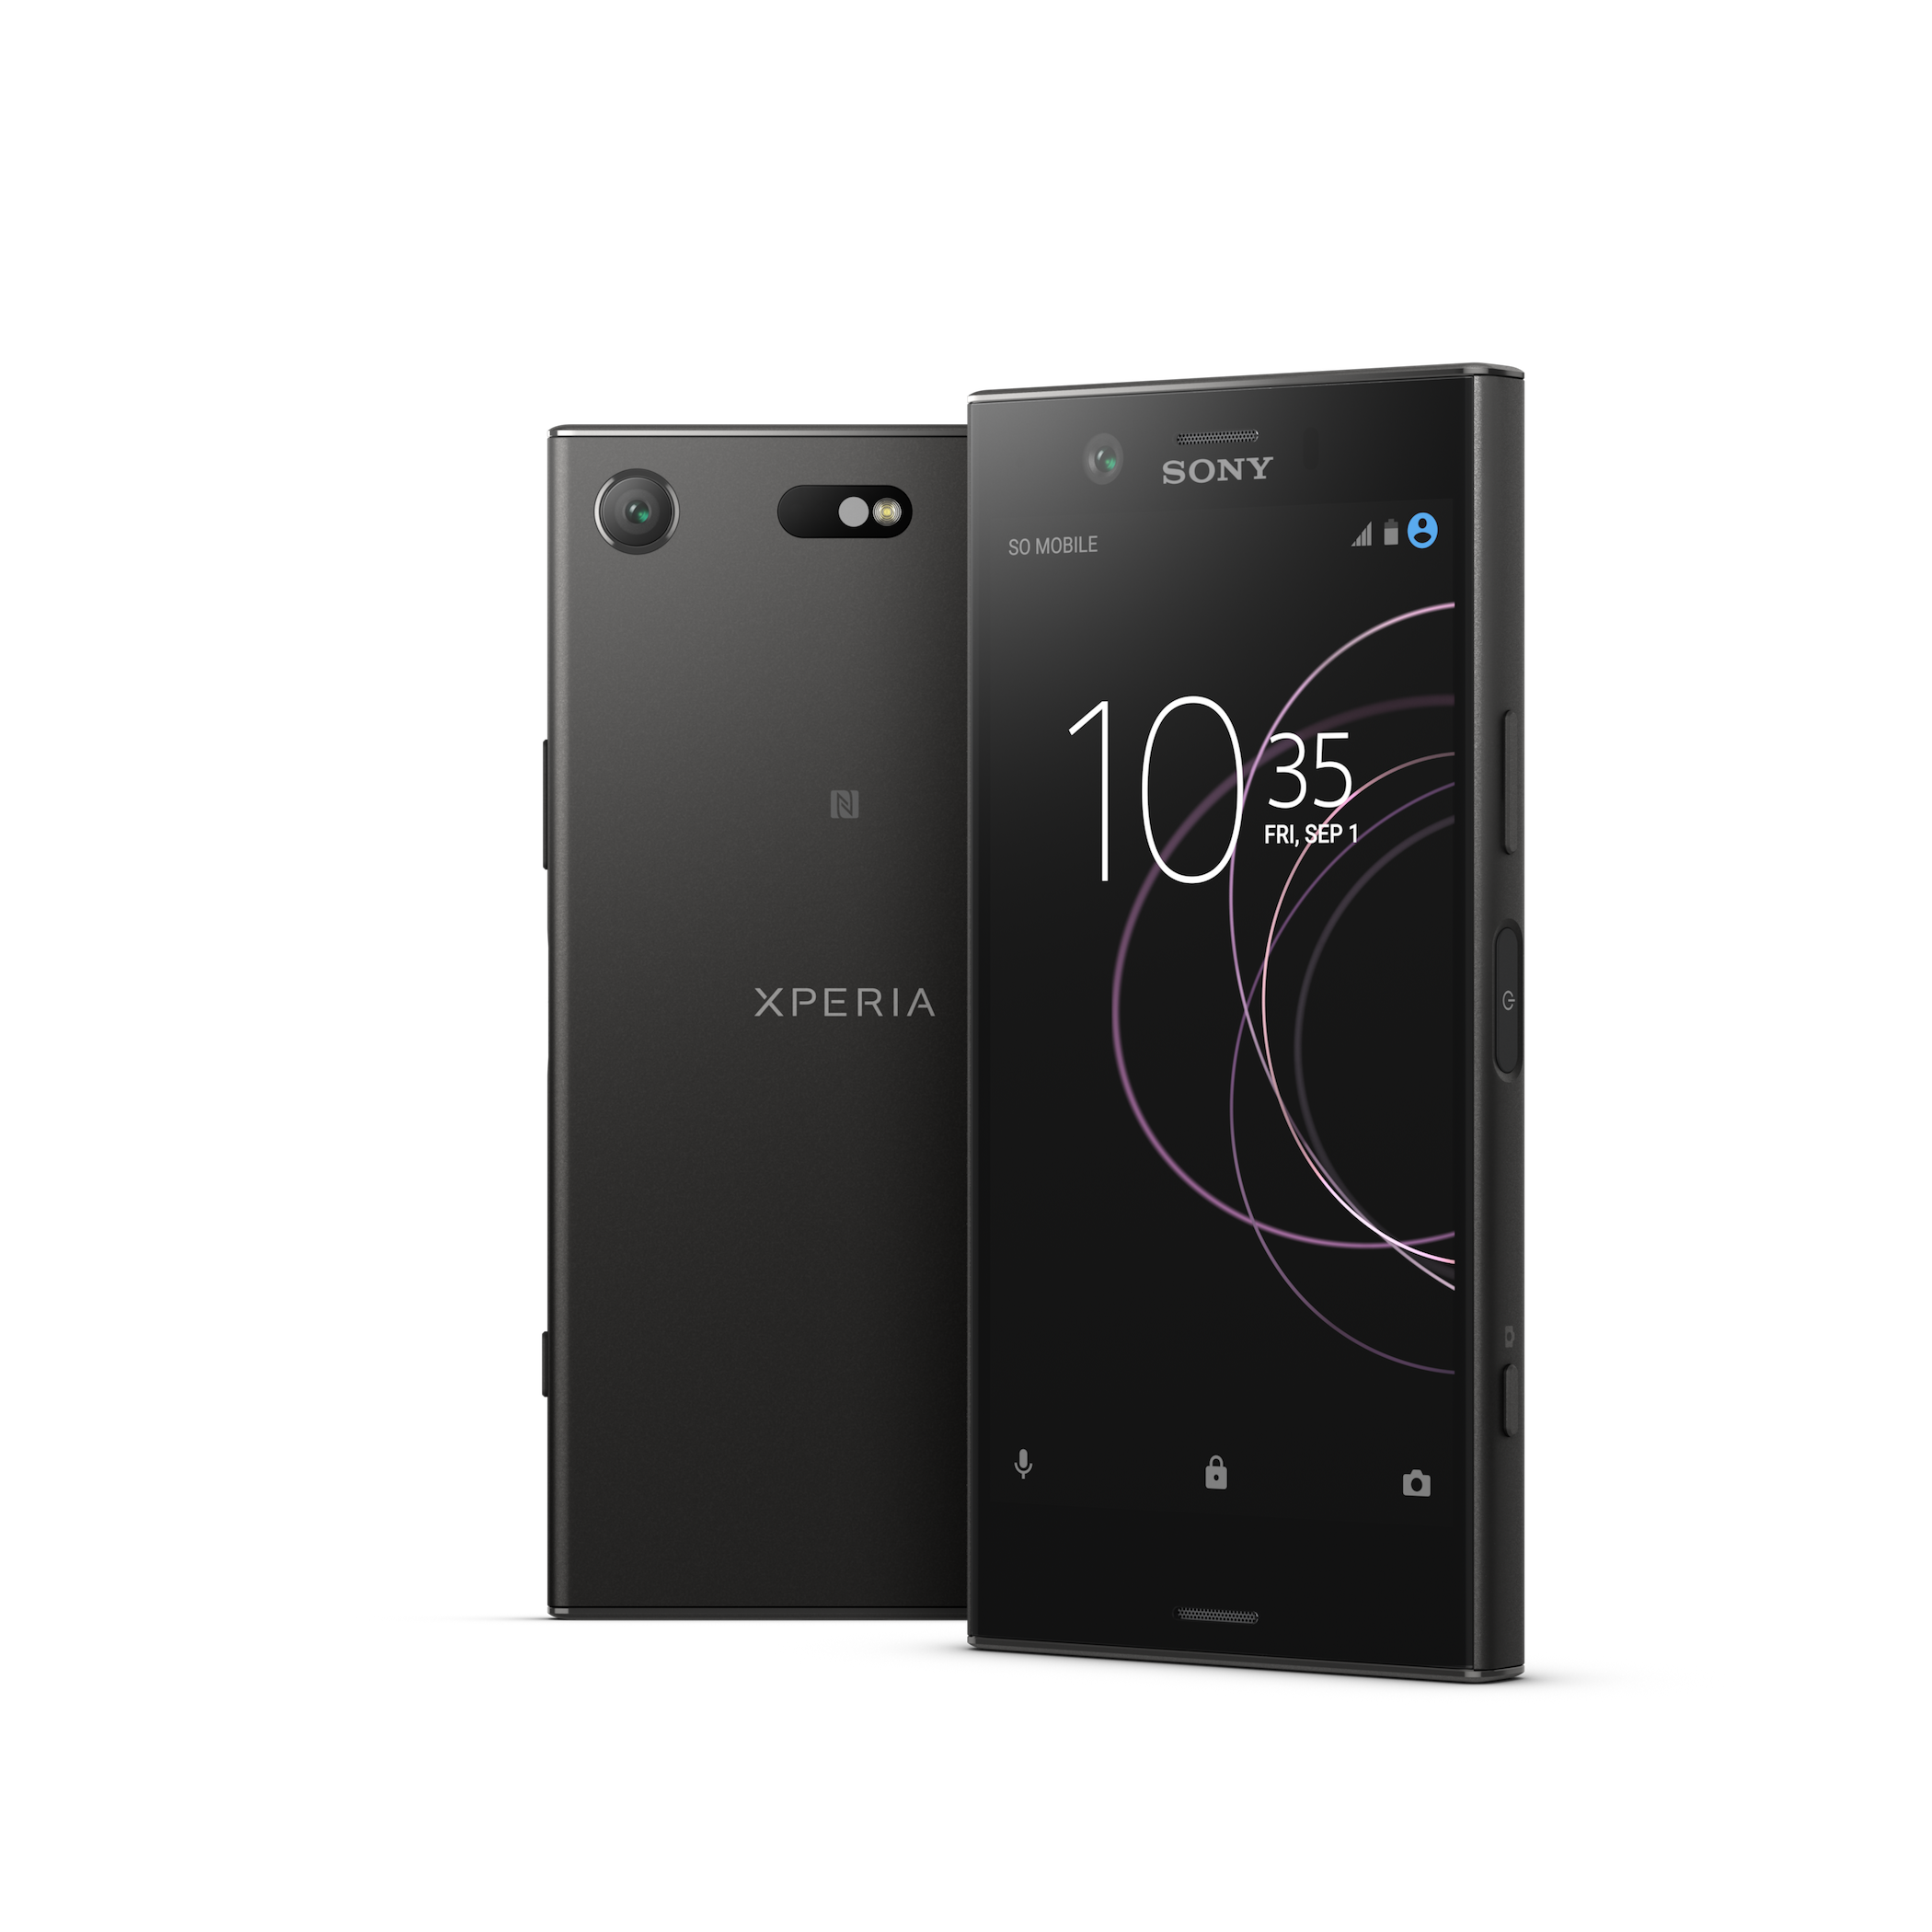 Tarolni fog a Sony Xperia XZ1 és Compact modell